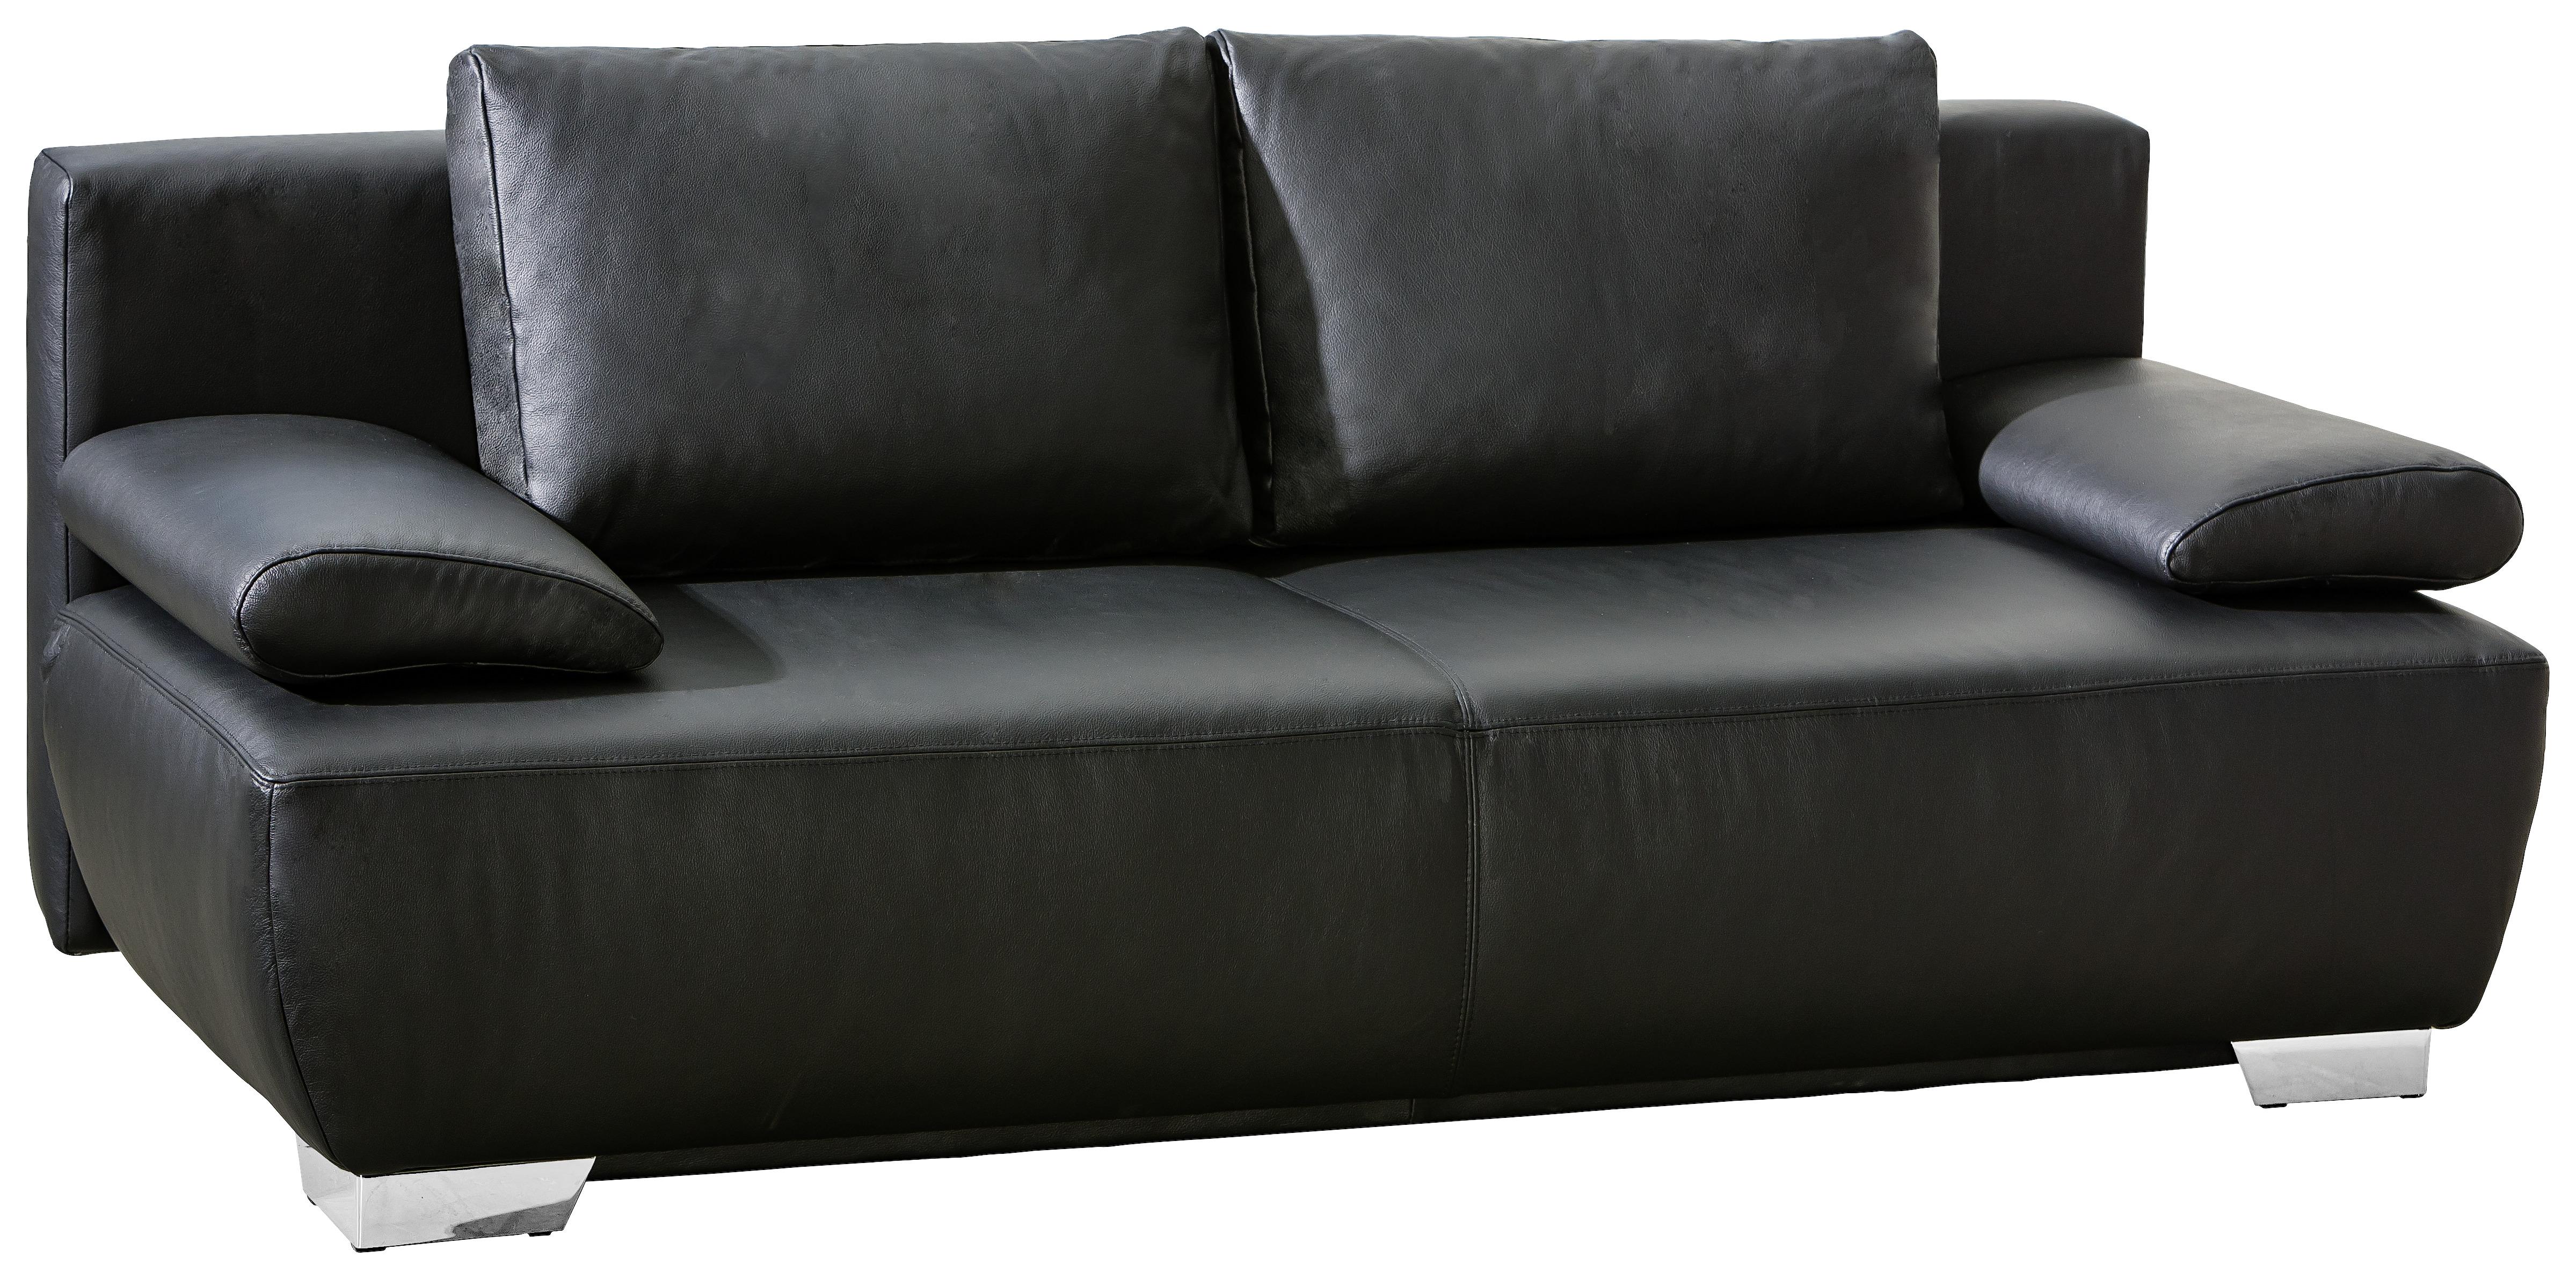 2-Sitzer-Sofa mit Schlaffunkt. + Bk. Nikita Schwarz Leder - Chromfarben/Schwarz, KONVENTIONELL, Leder (195/85/90cm) - Livetastic